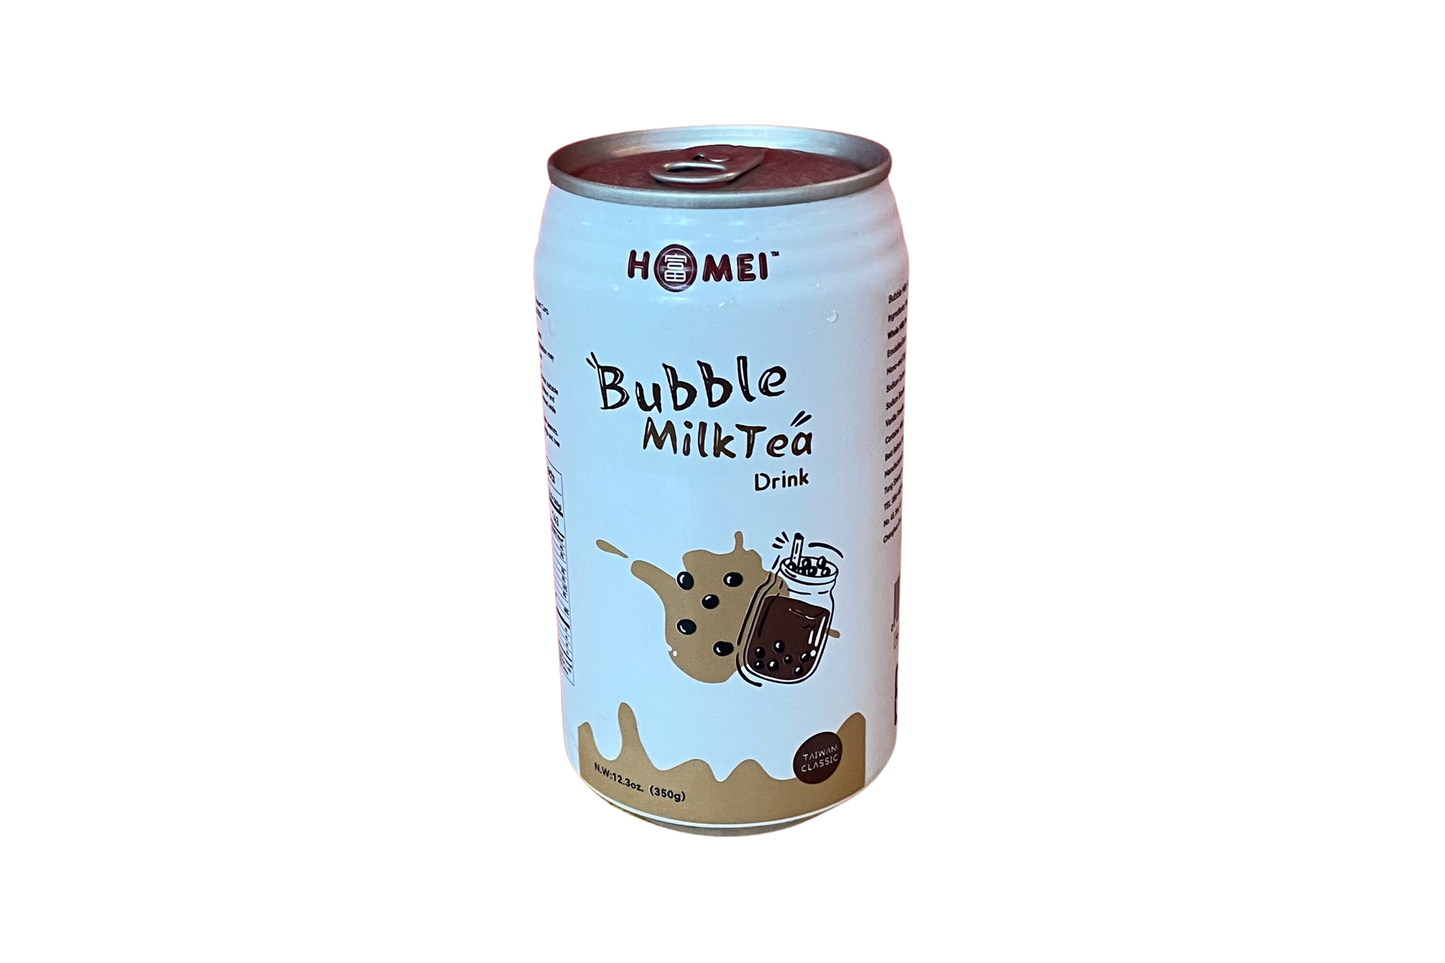 Homei Bubble Milk Tea Original 350g